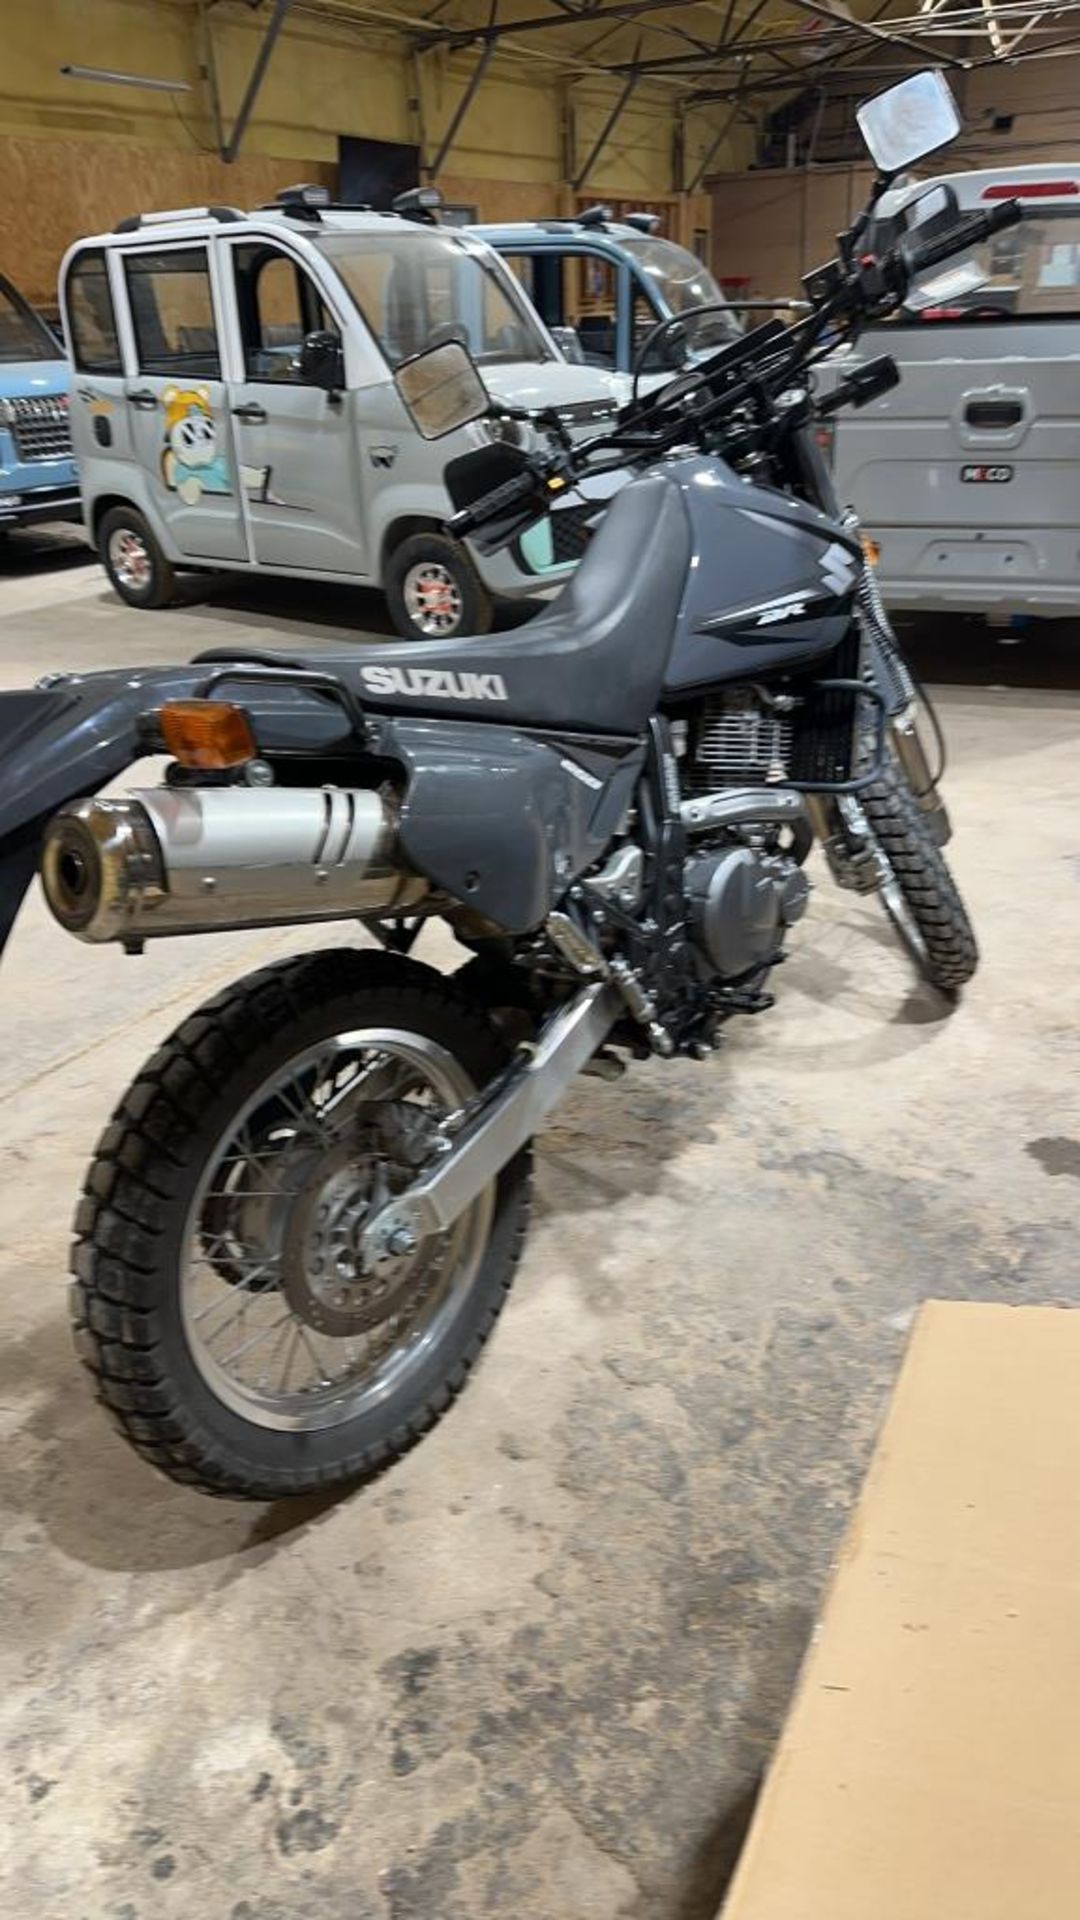 2012 Suzuki DR650S motorcycle - Image 13 of 36